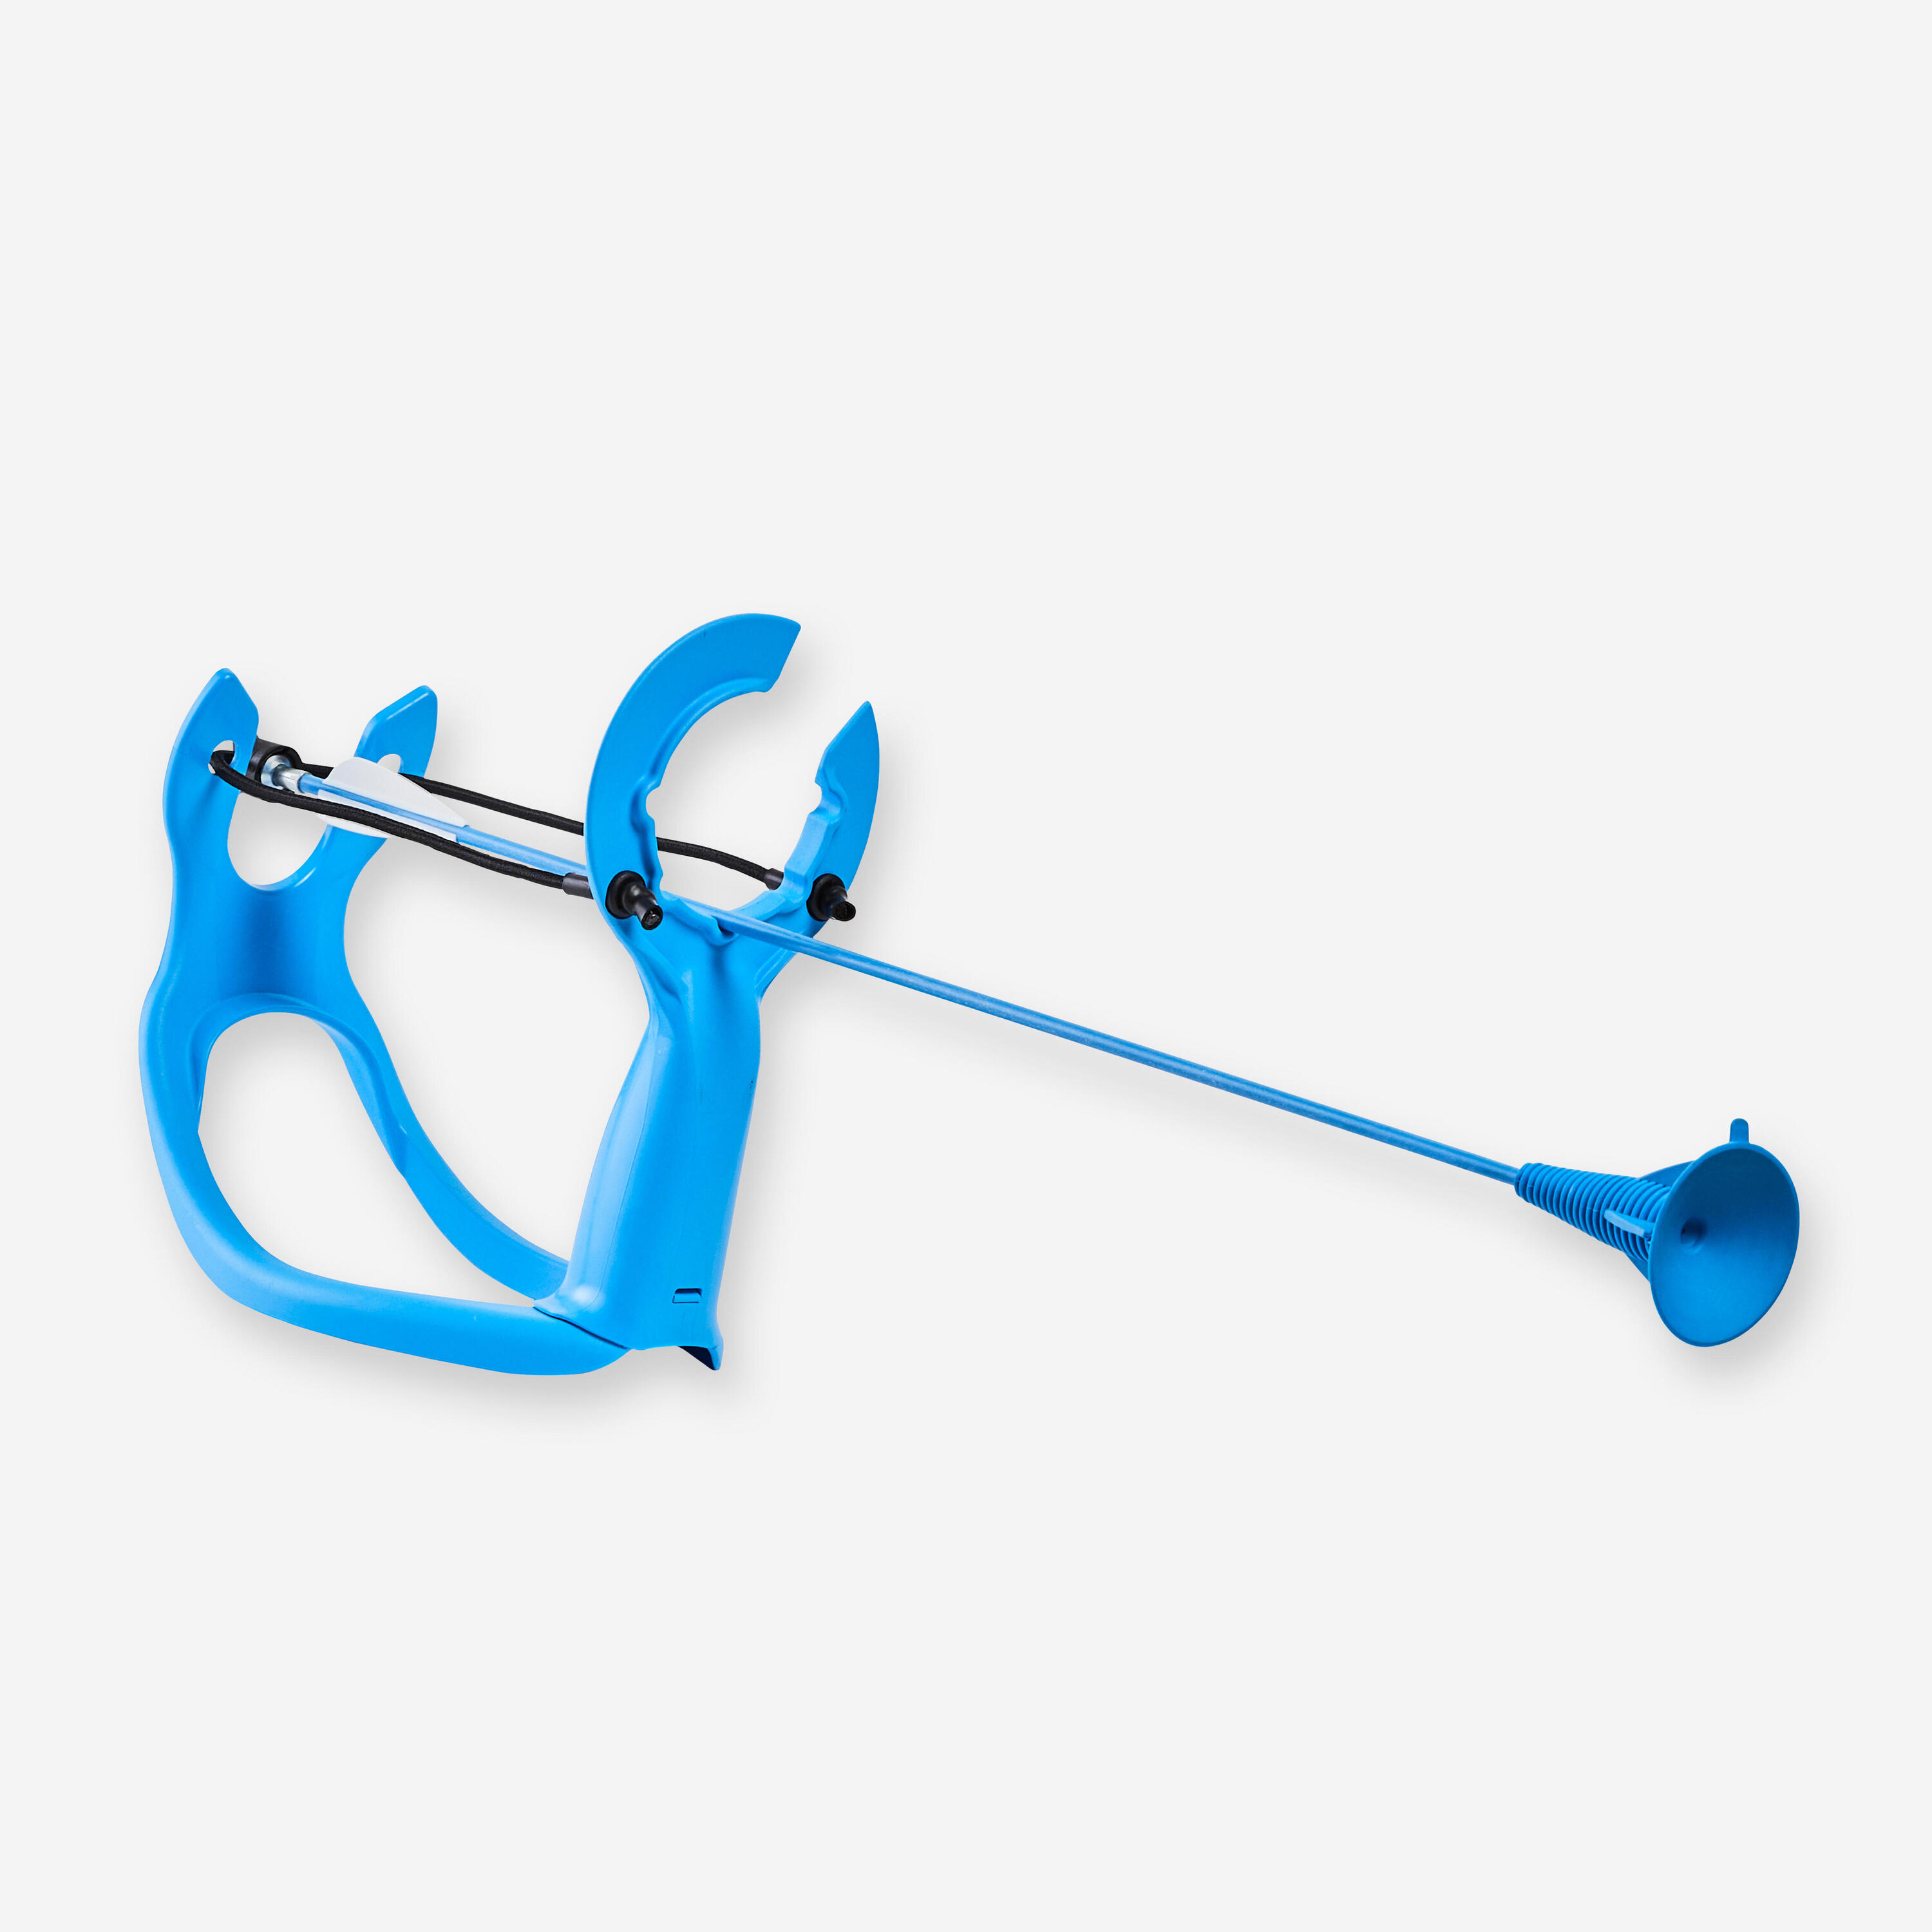 Easytech Archery Set - Blue 1/15